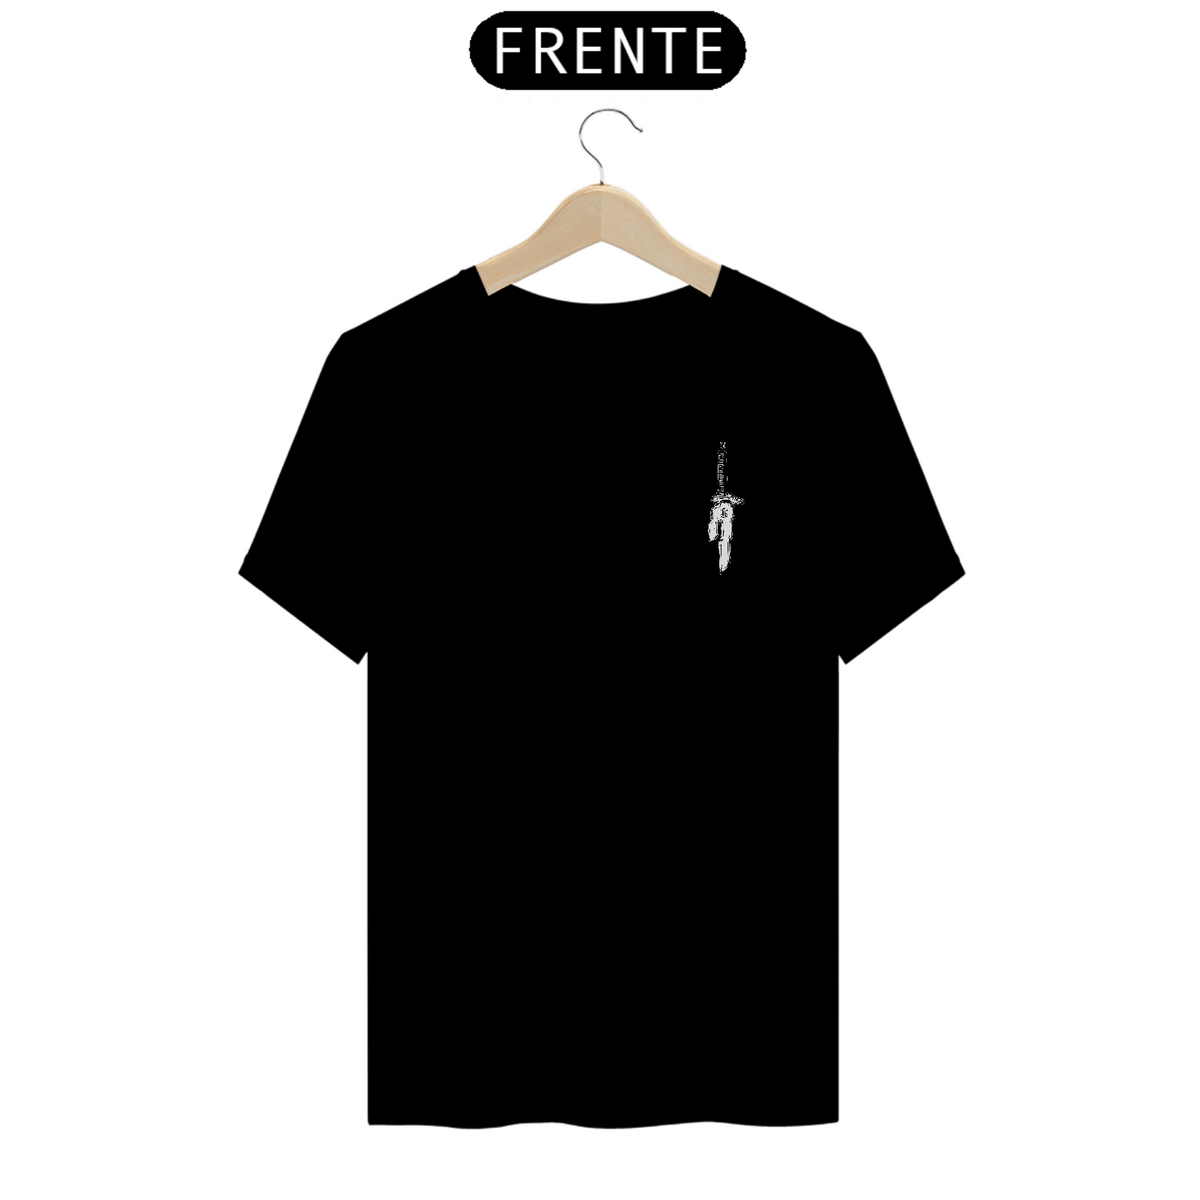 Nome do produto: Camiseta Preta - Inverted Spear Of Heaven